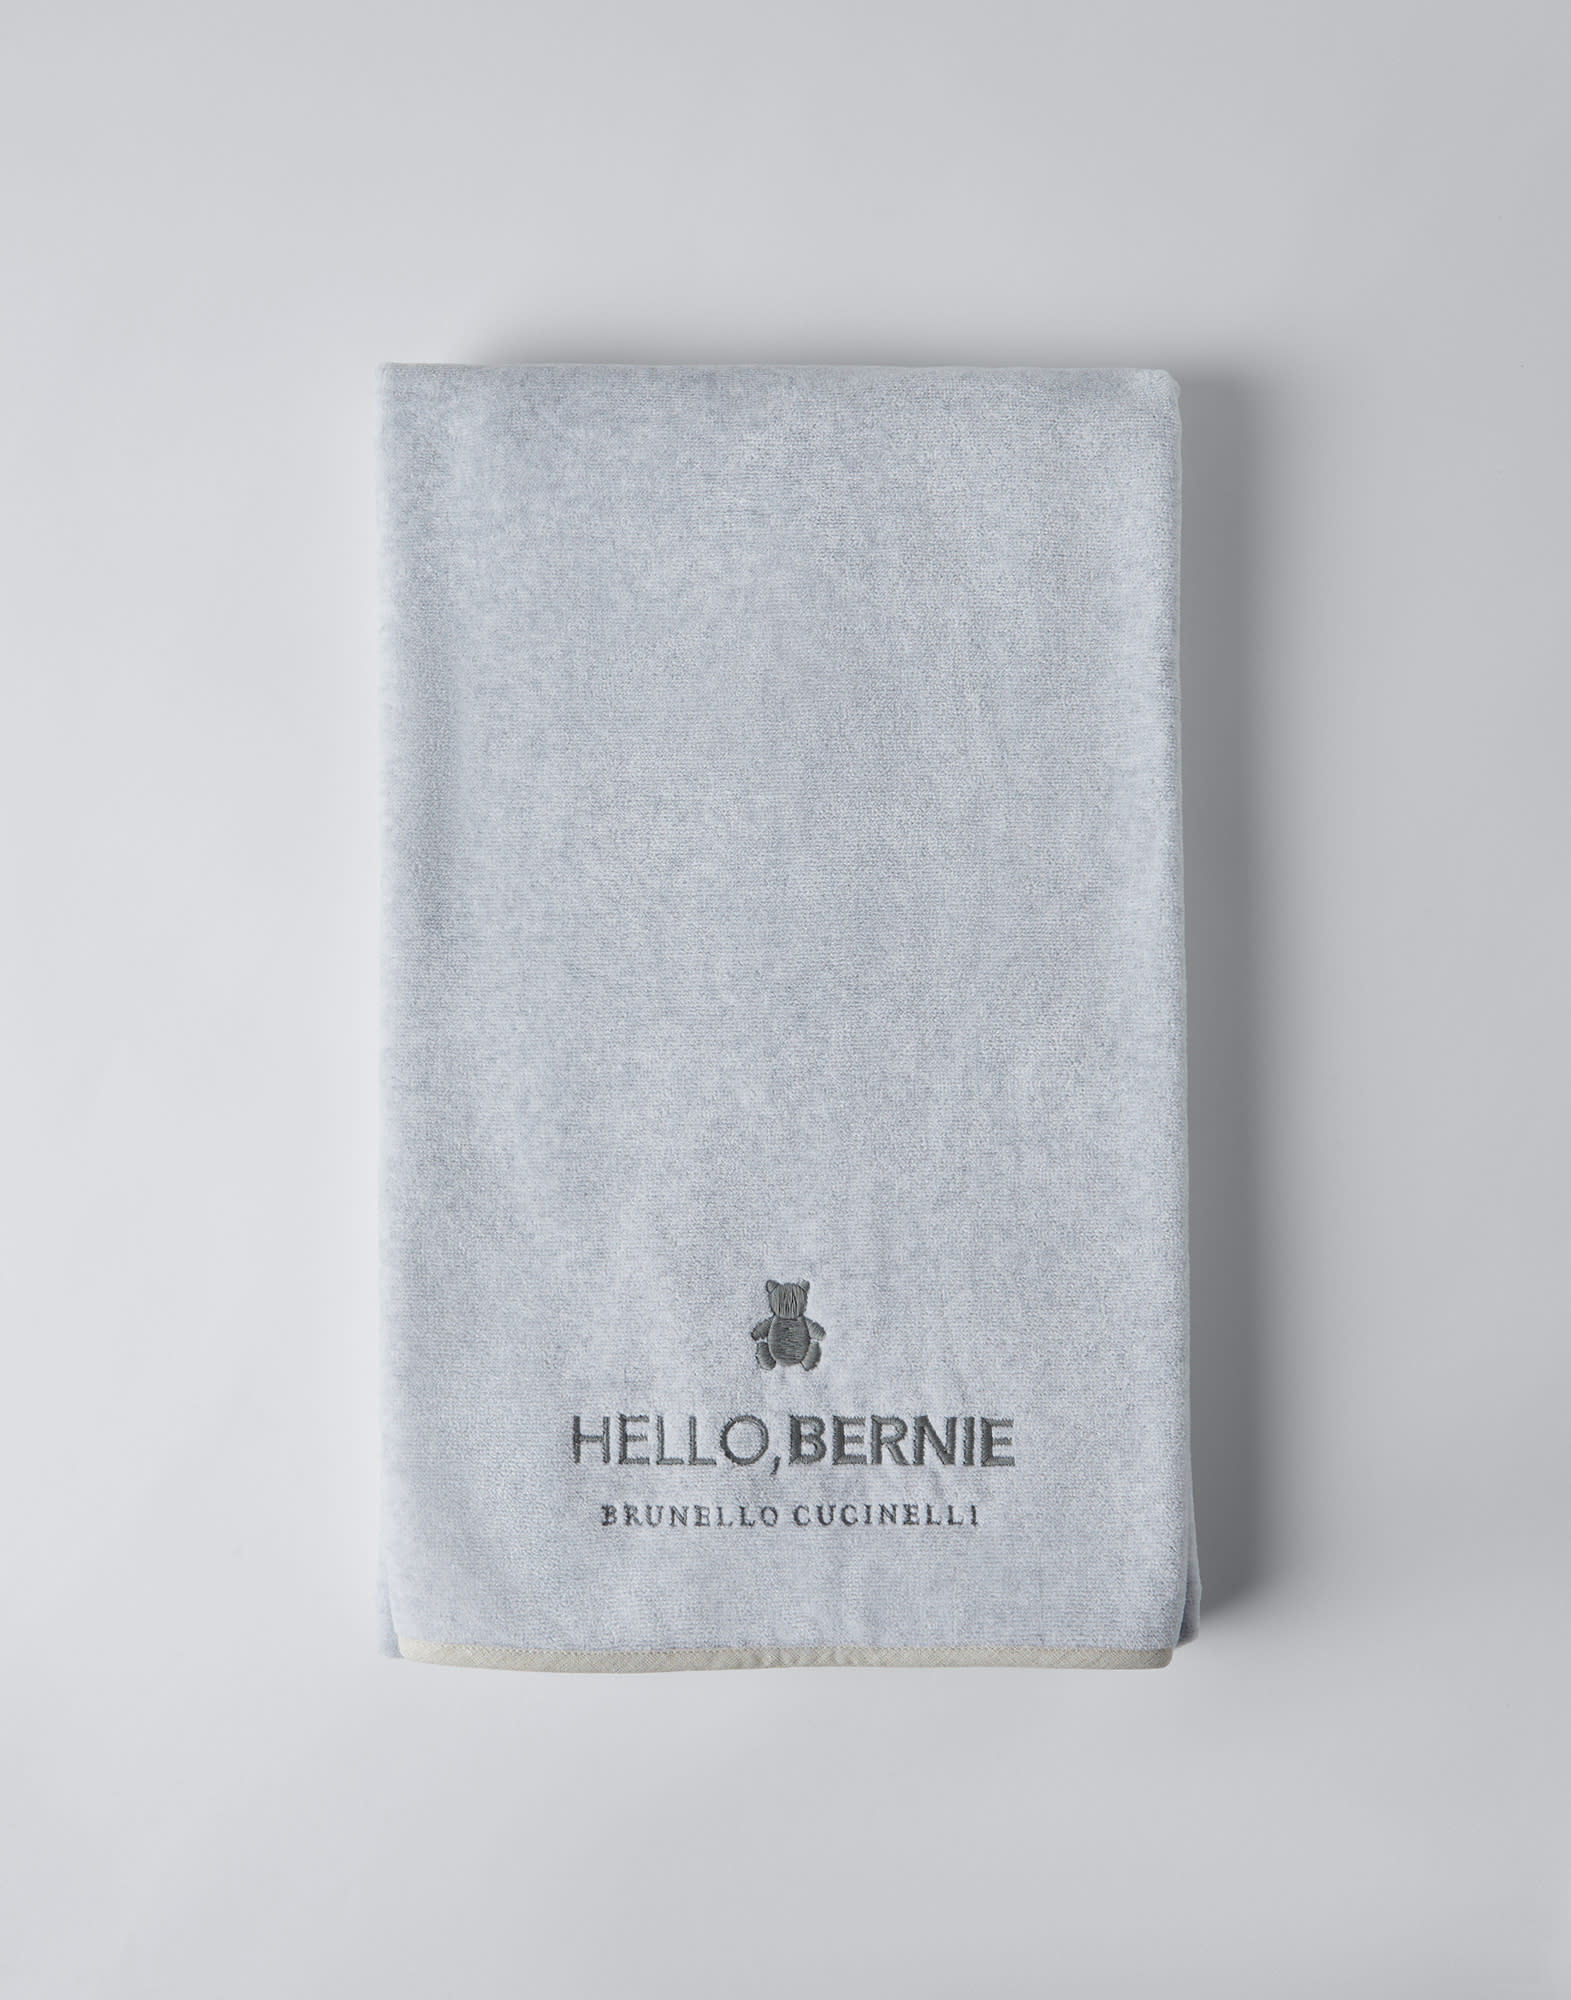 Bernie towel